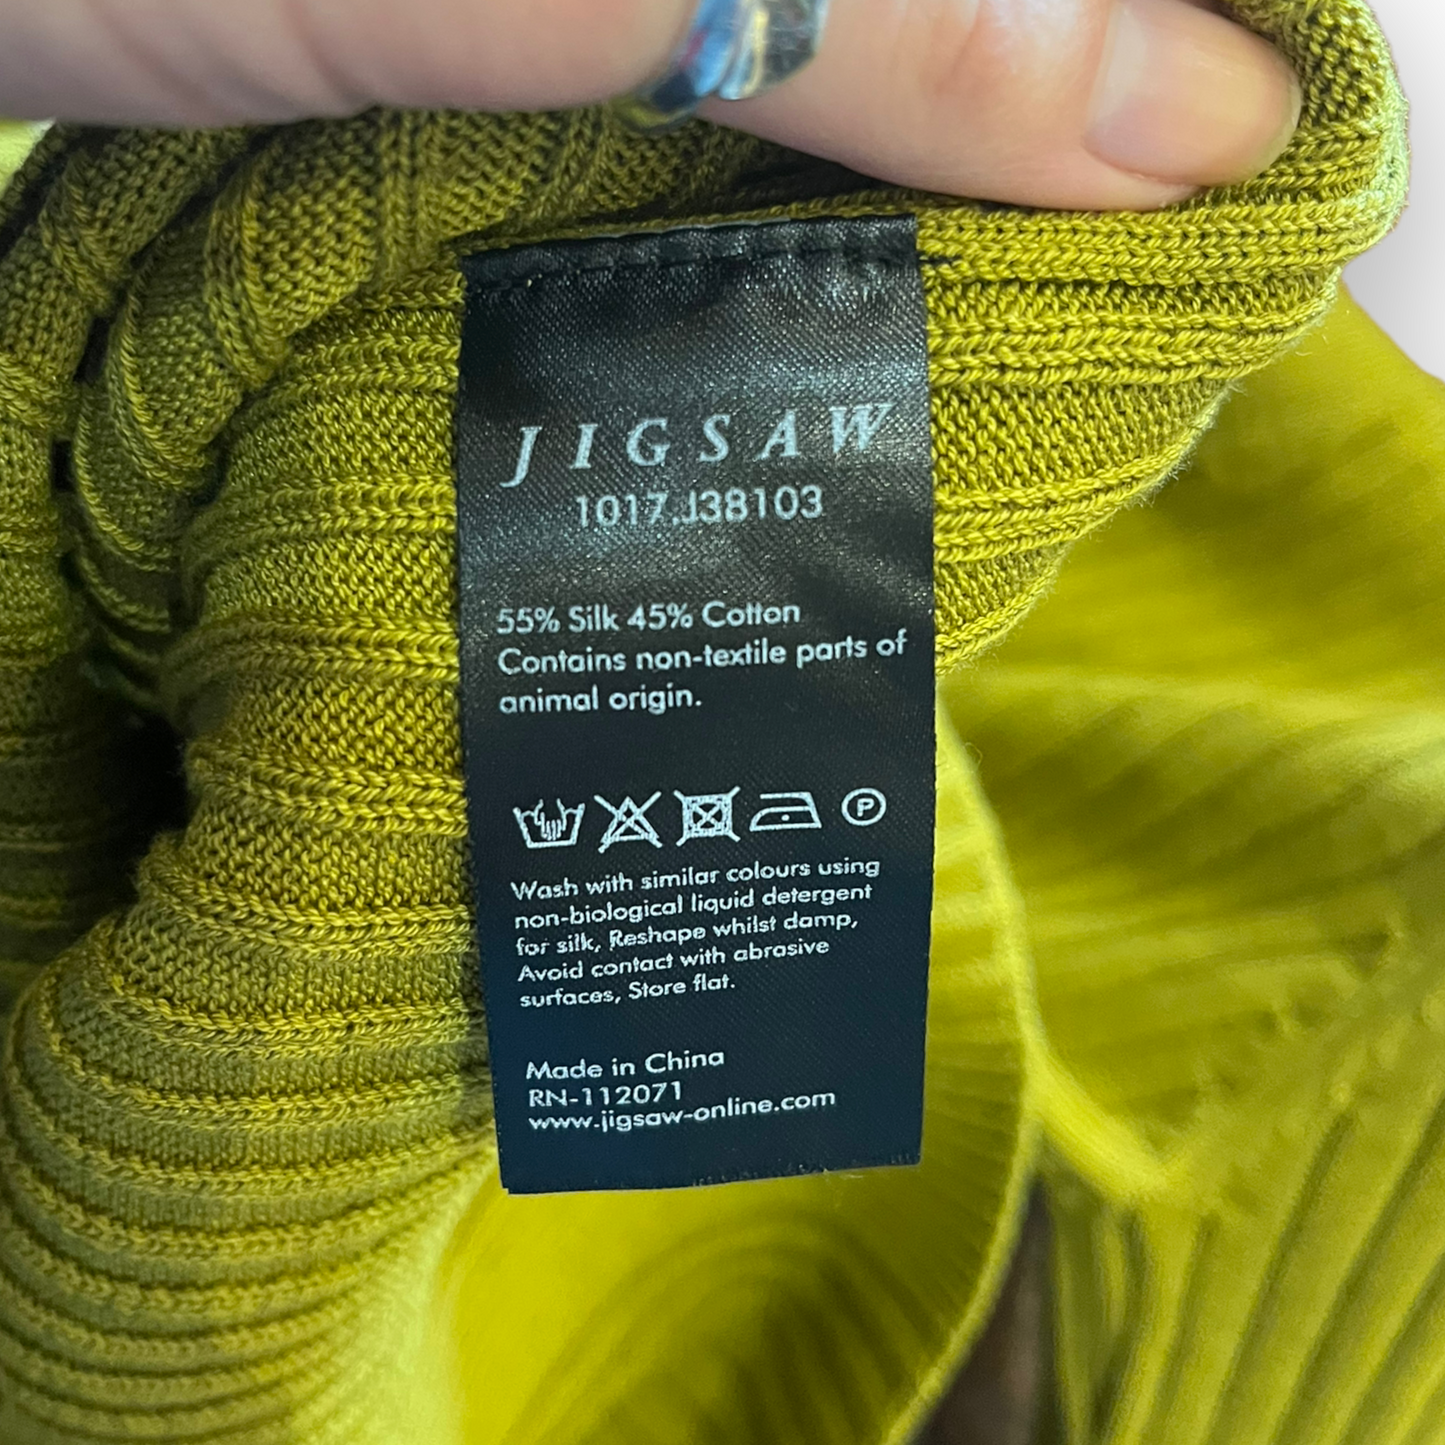 NEW Jigsaw Silk and Cotton Green Cardigan